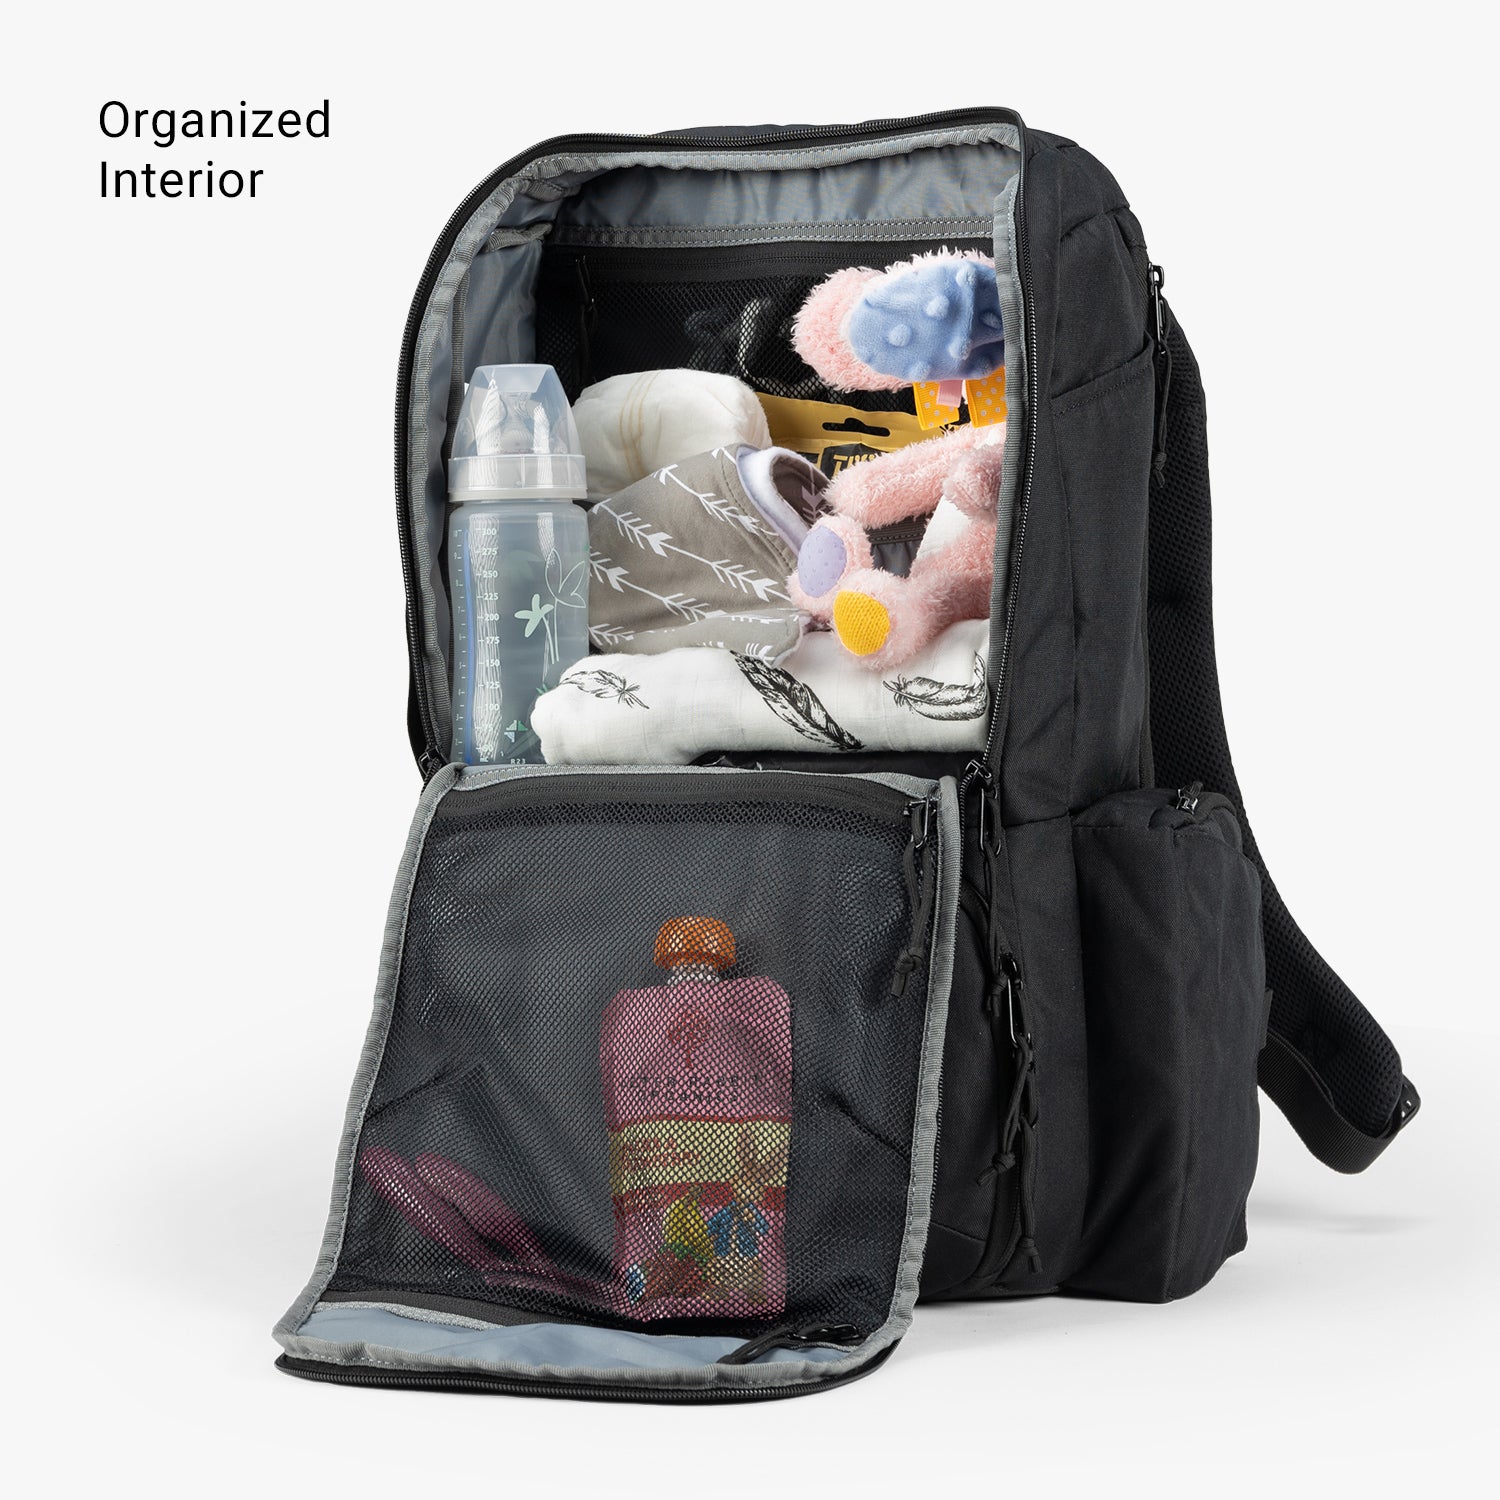 Expedition Diaper Bag